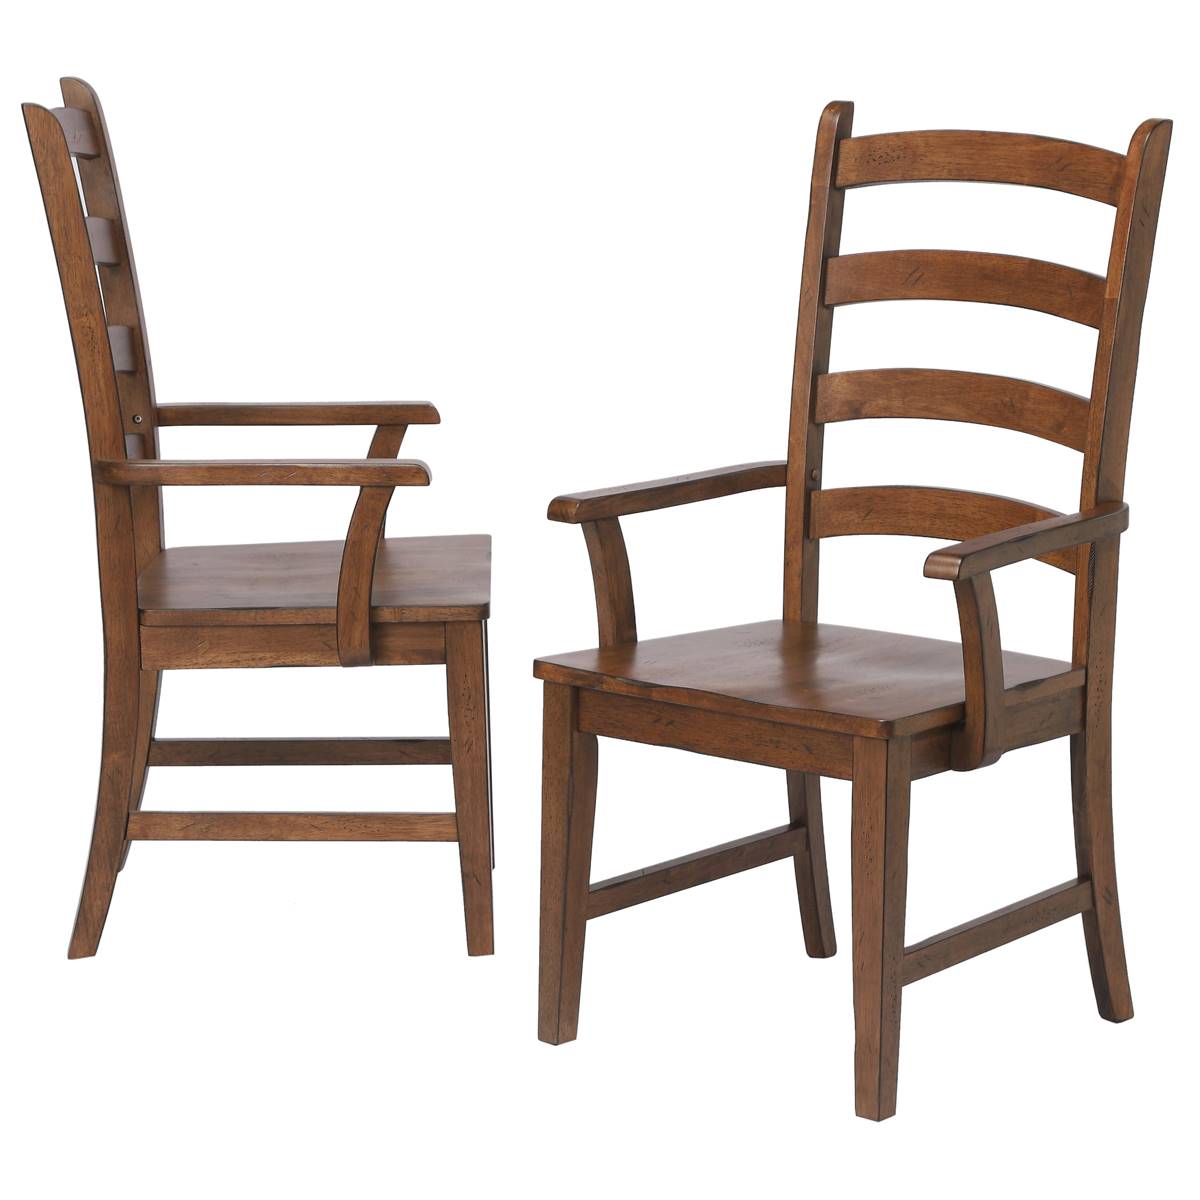 Besthom Brook Arm Chairs - Set Of 2